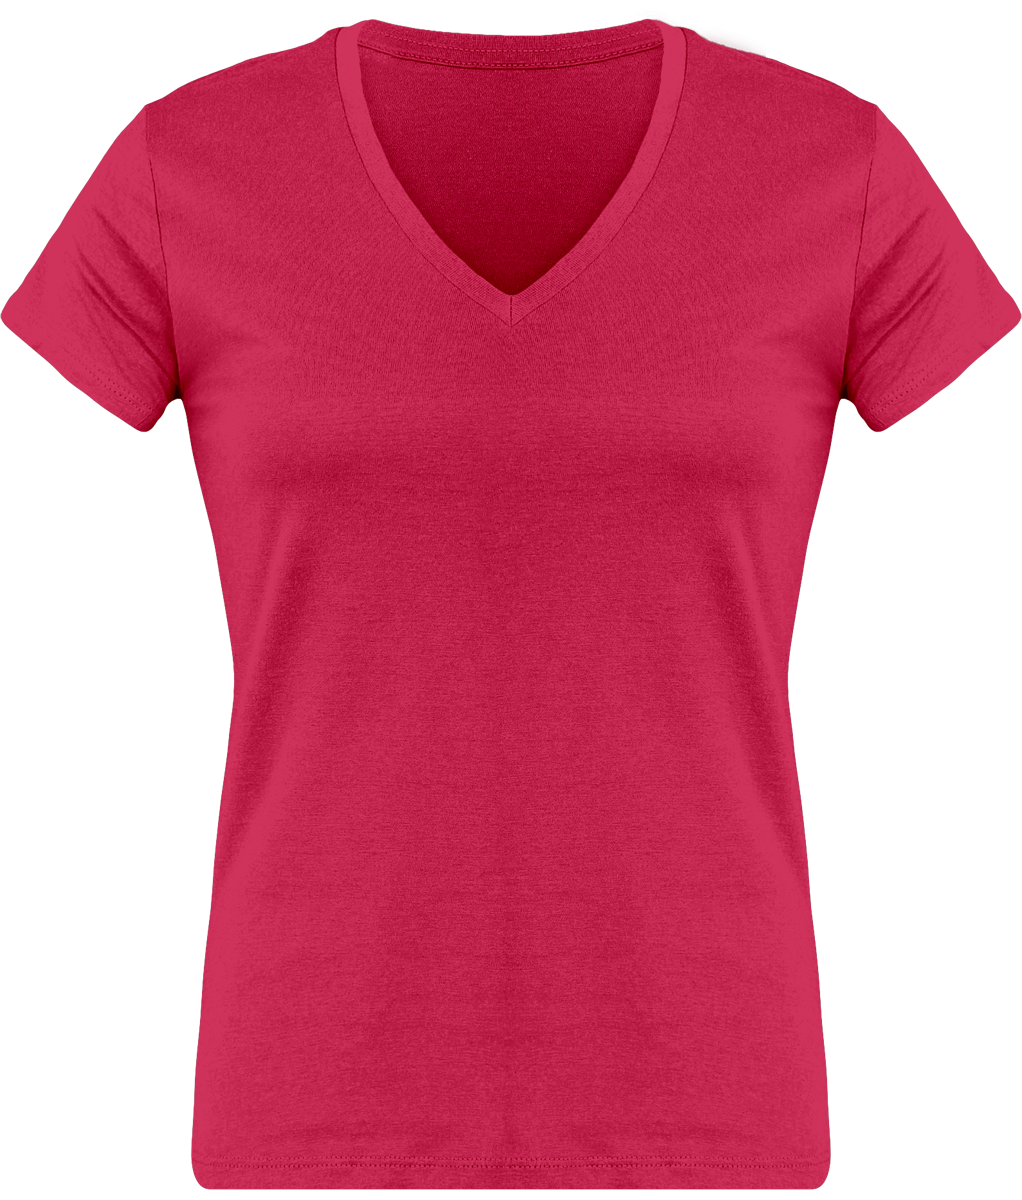 Customizable Women's T-Shirt, Feminine And Comfortable With Its V-Neck Fuchsia